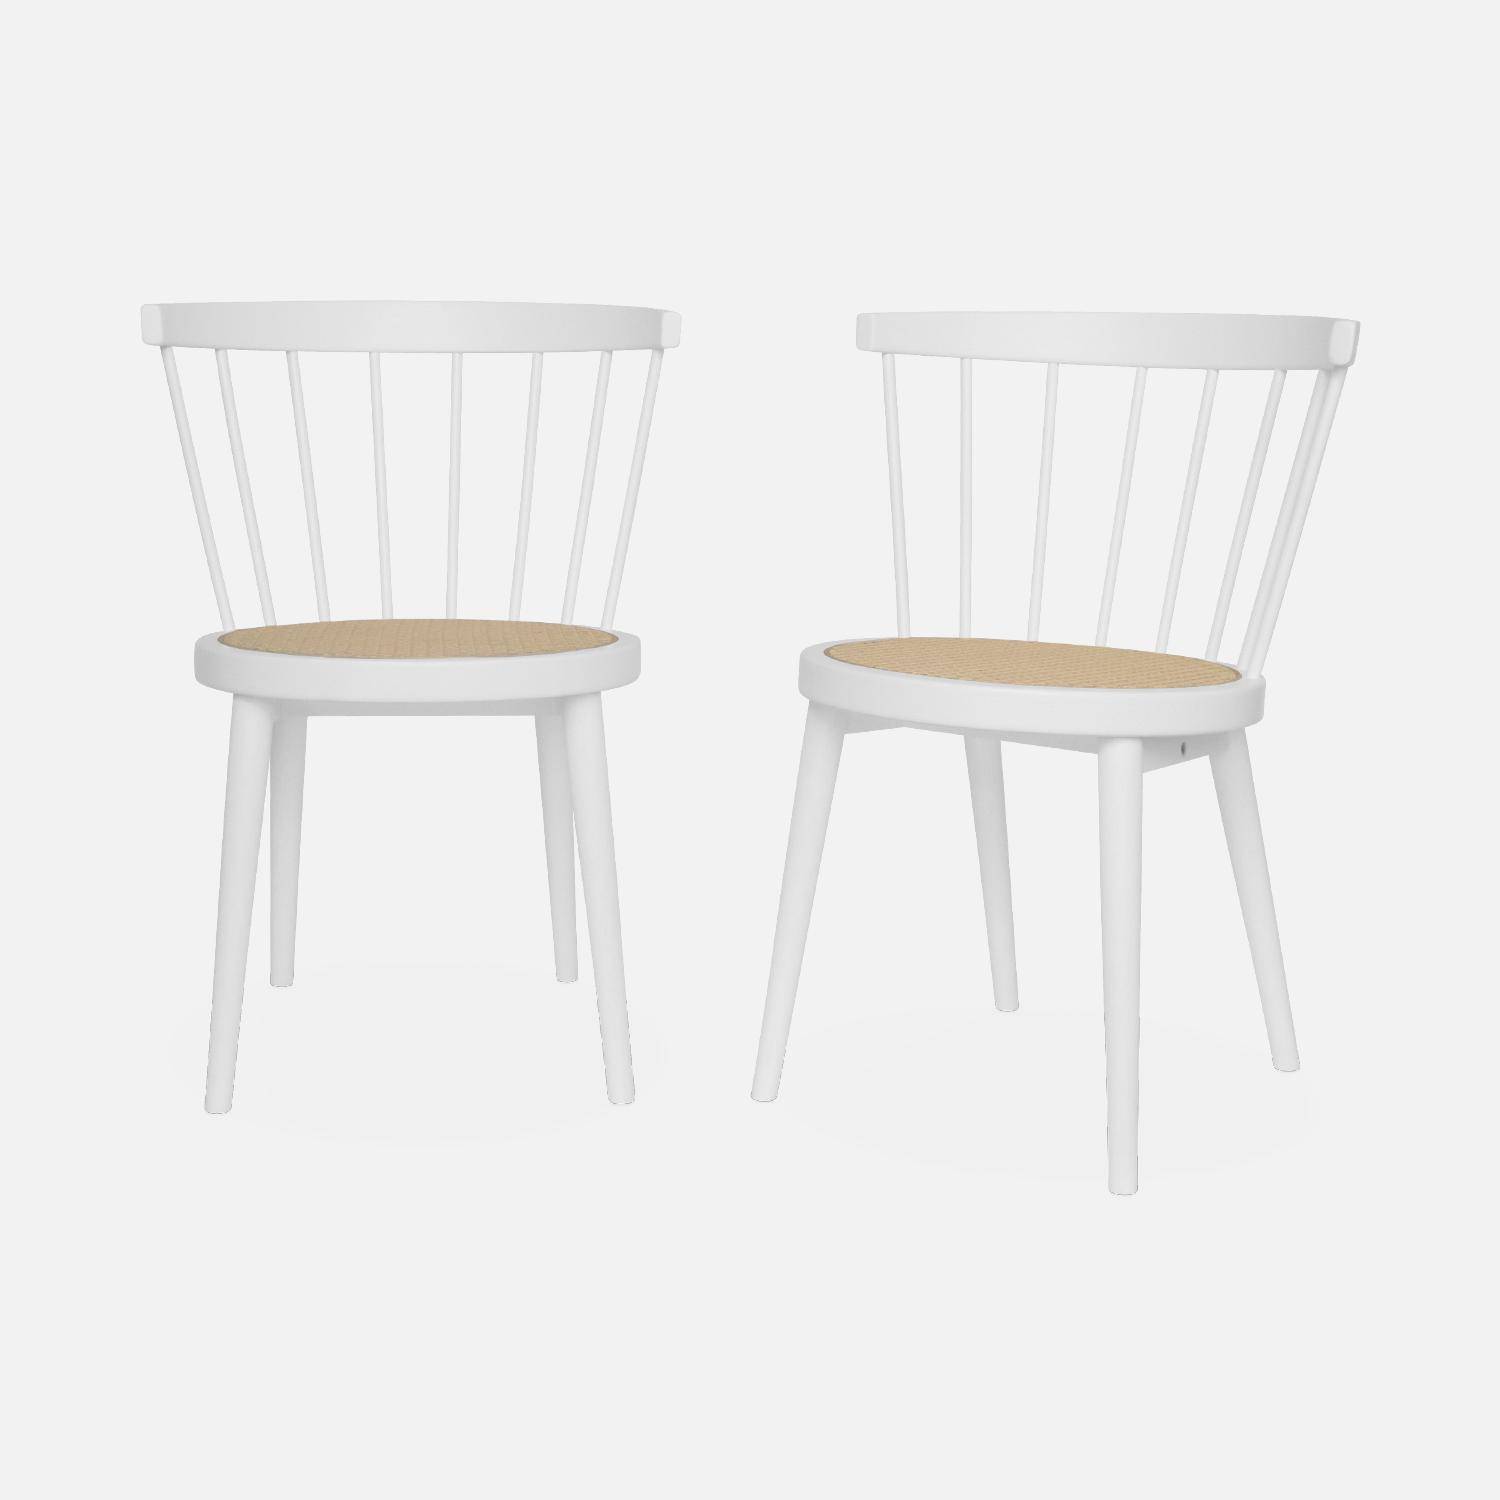 Juego de 2 sillas de madera blanca y caña, Nora, A 54 x P 54 x Alt 76,5cm. Photo3